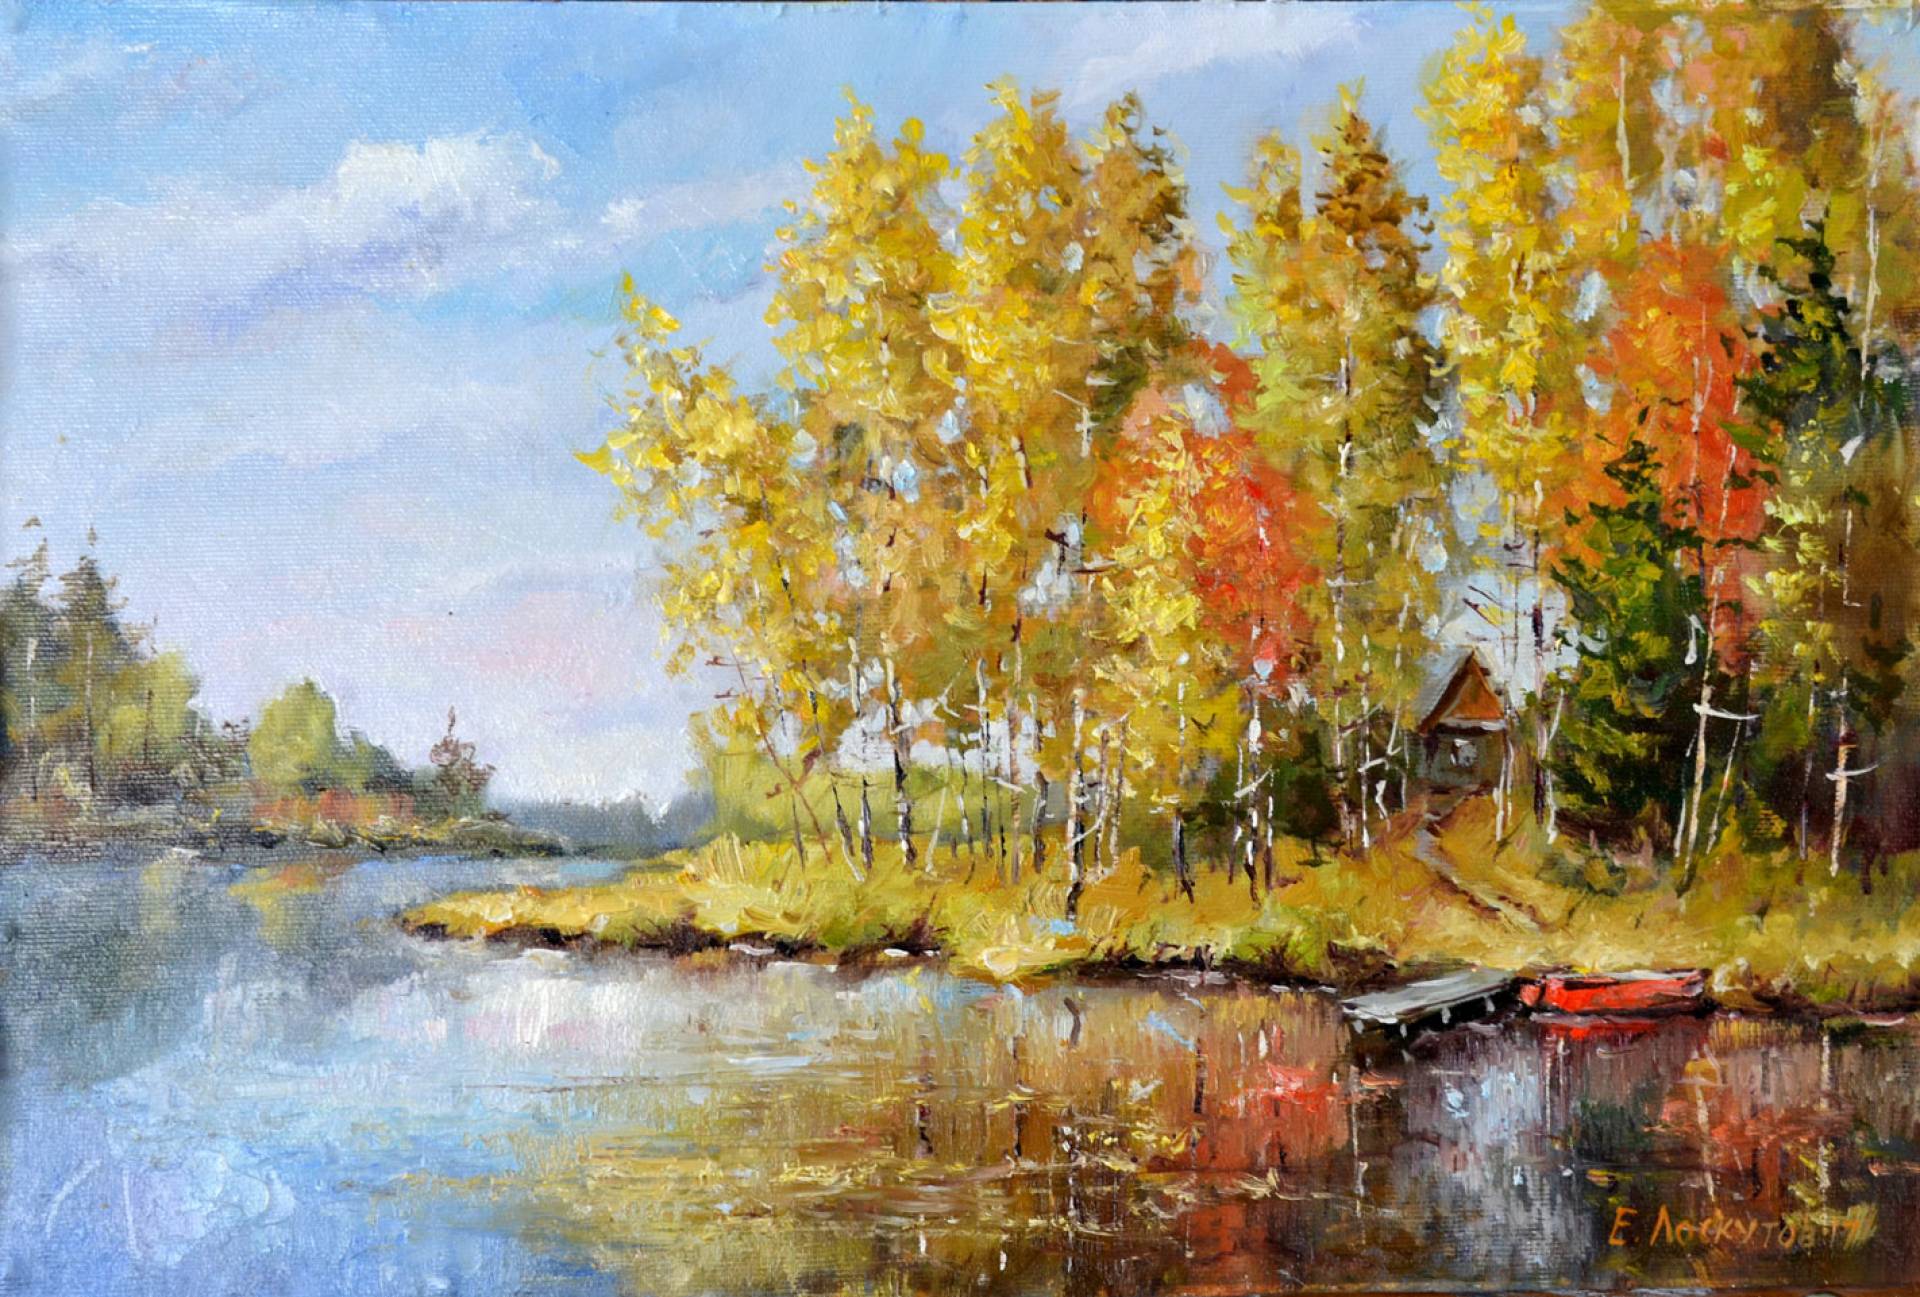 Autumn, Evgeny Loskutov, Buy the painting Oil